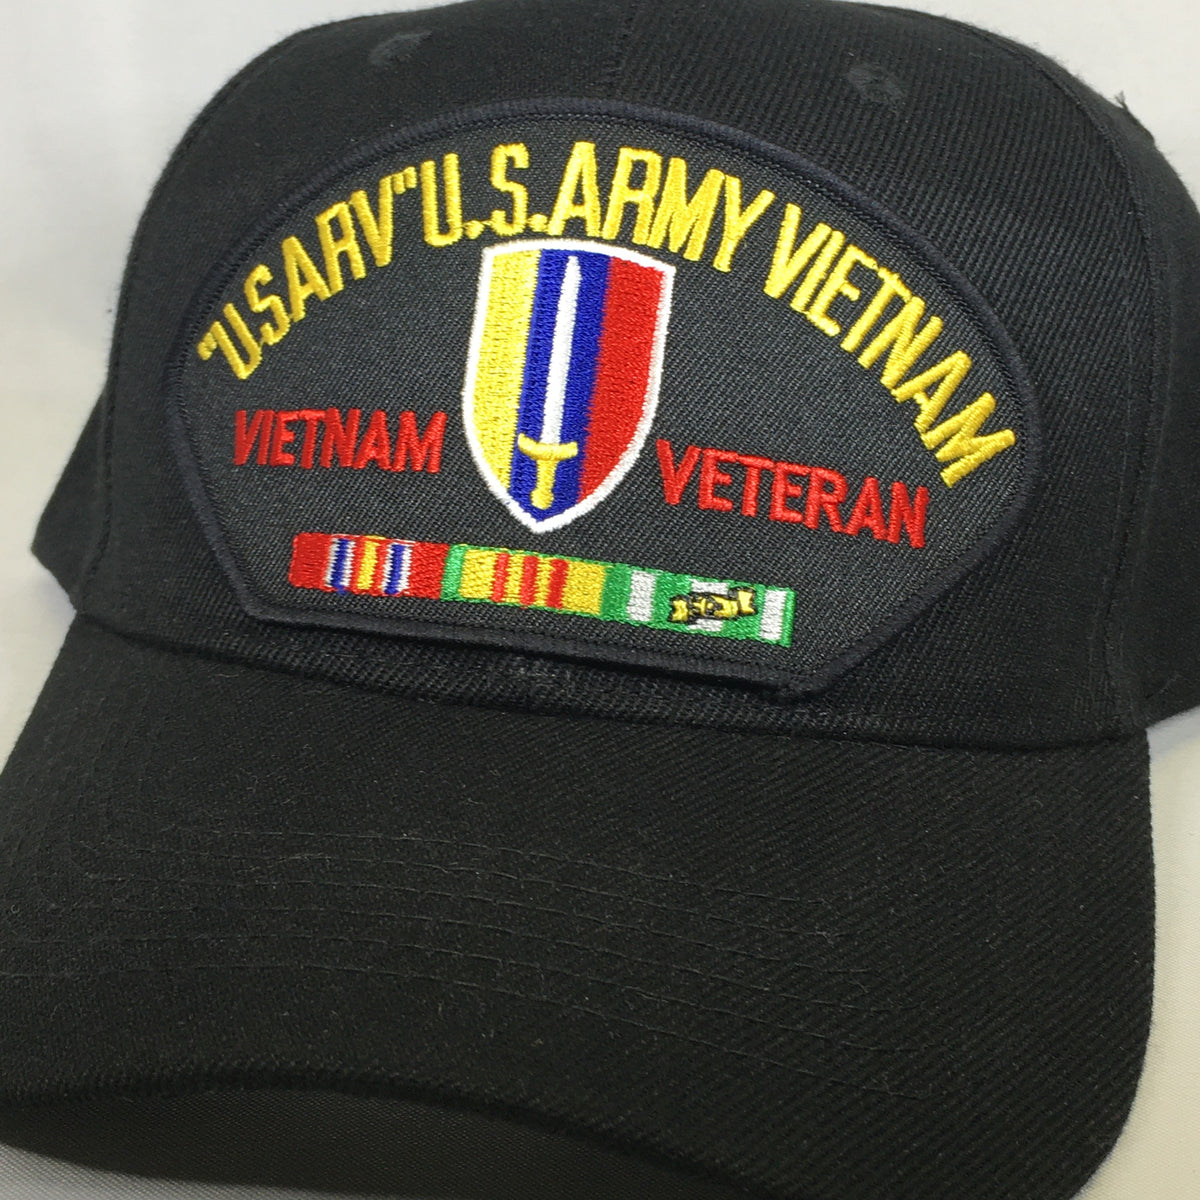 US Army Vietnam Veteran Cap - USARV